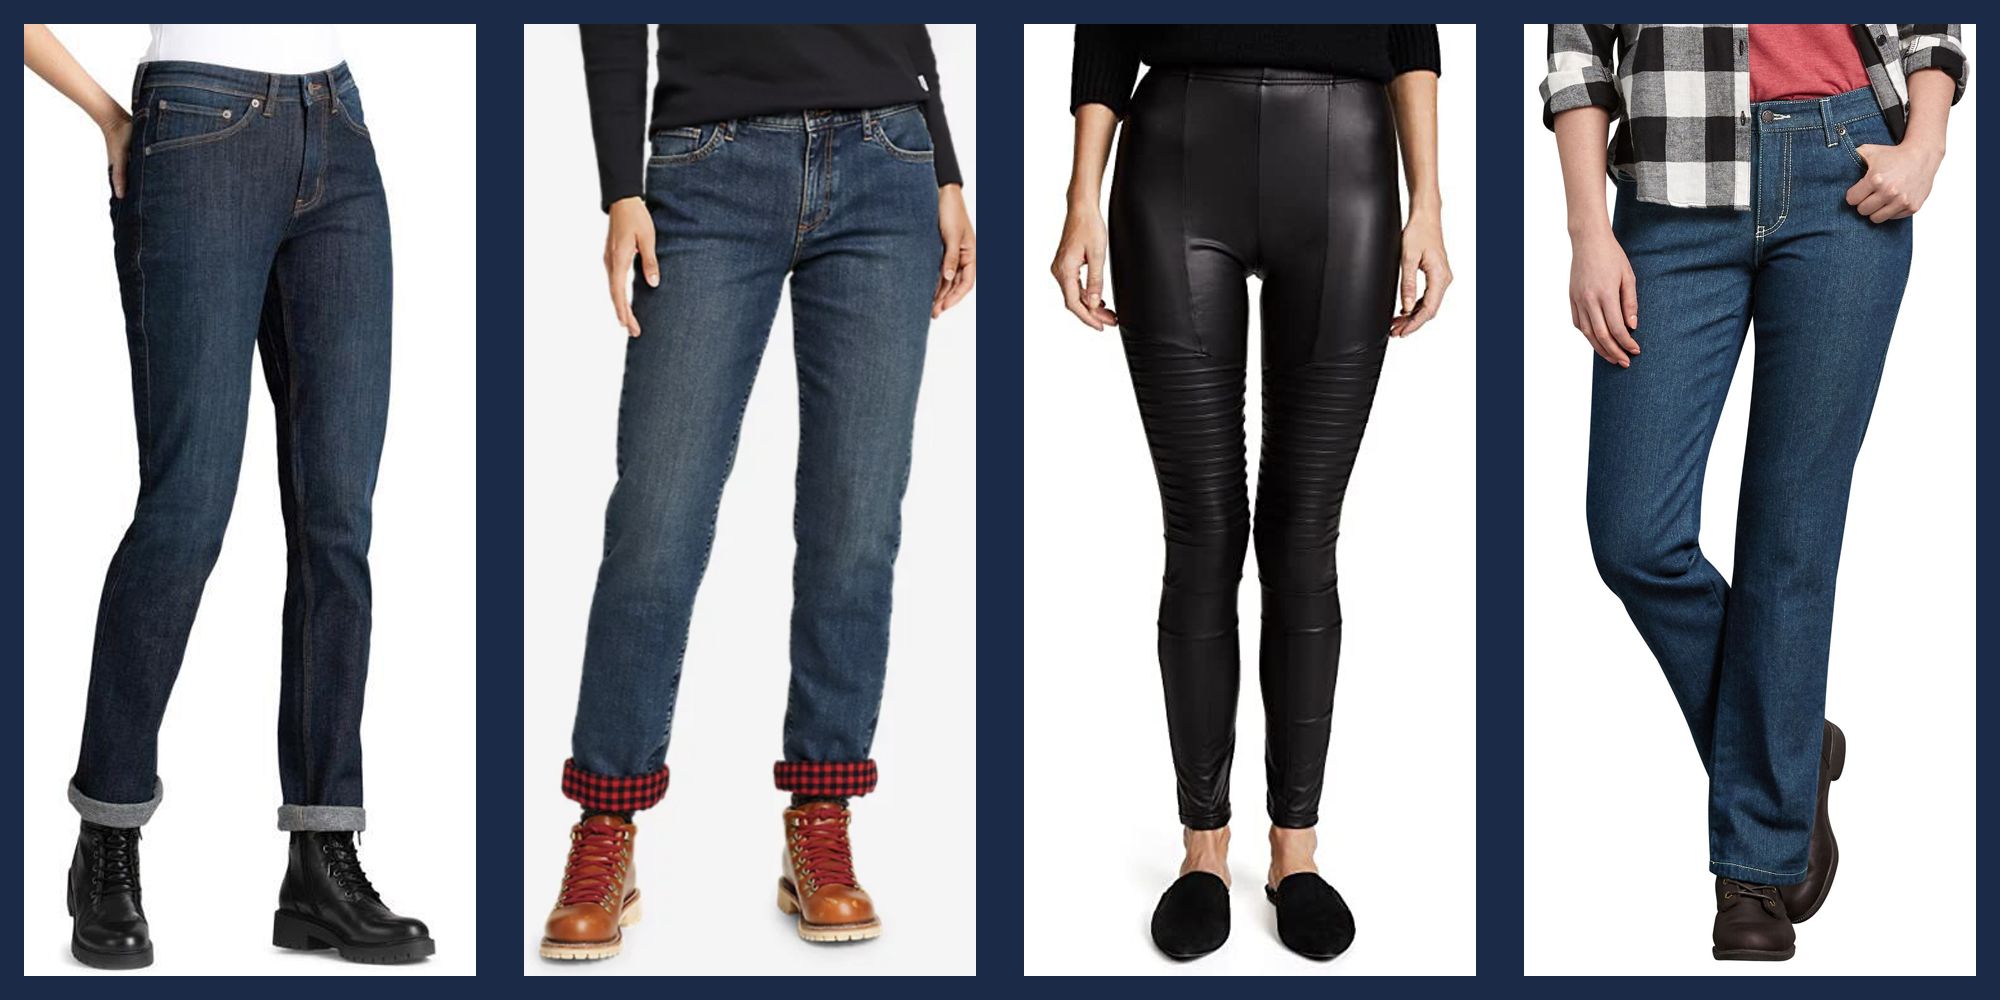 lus Postbode cel Fleece Lined Jeans for Women - The Best Fleece Lined Jeans